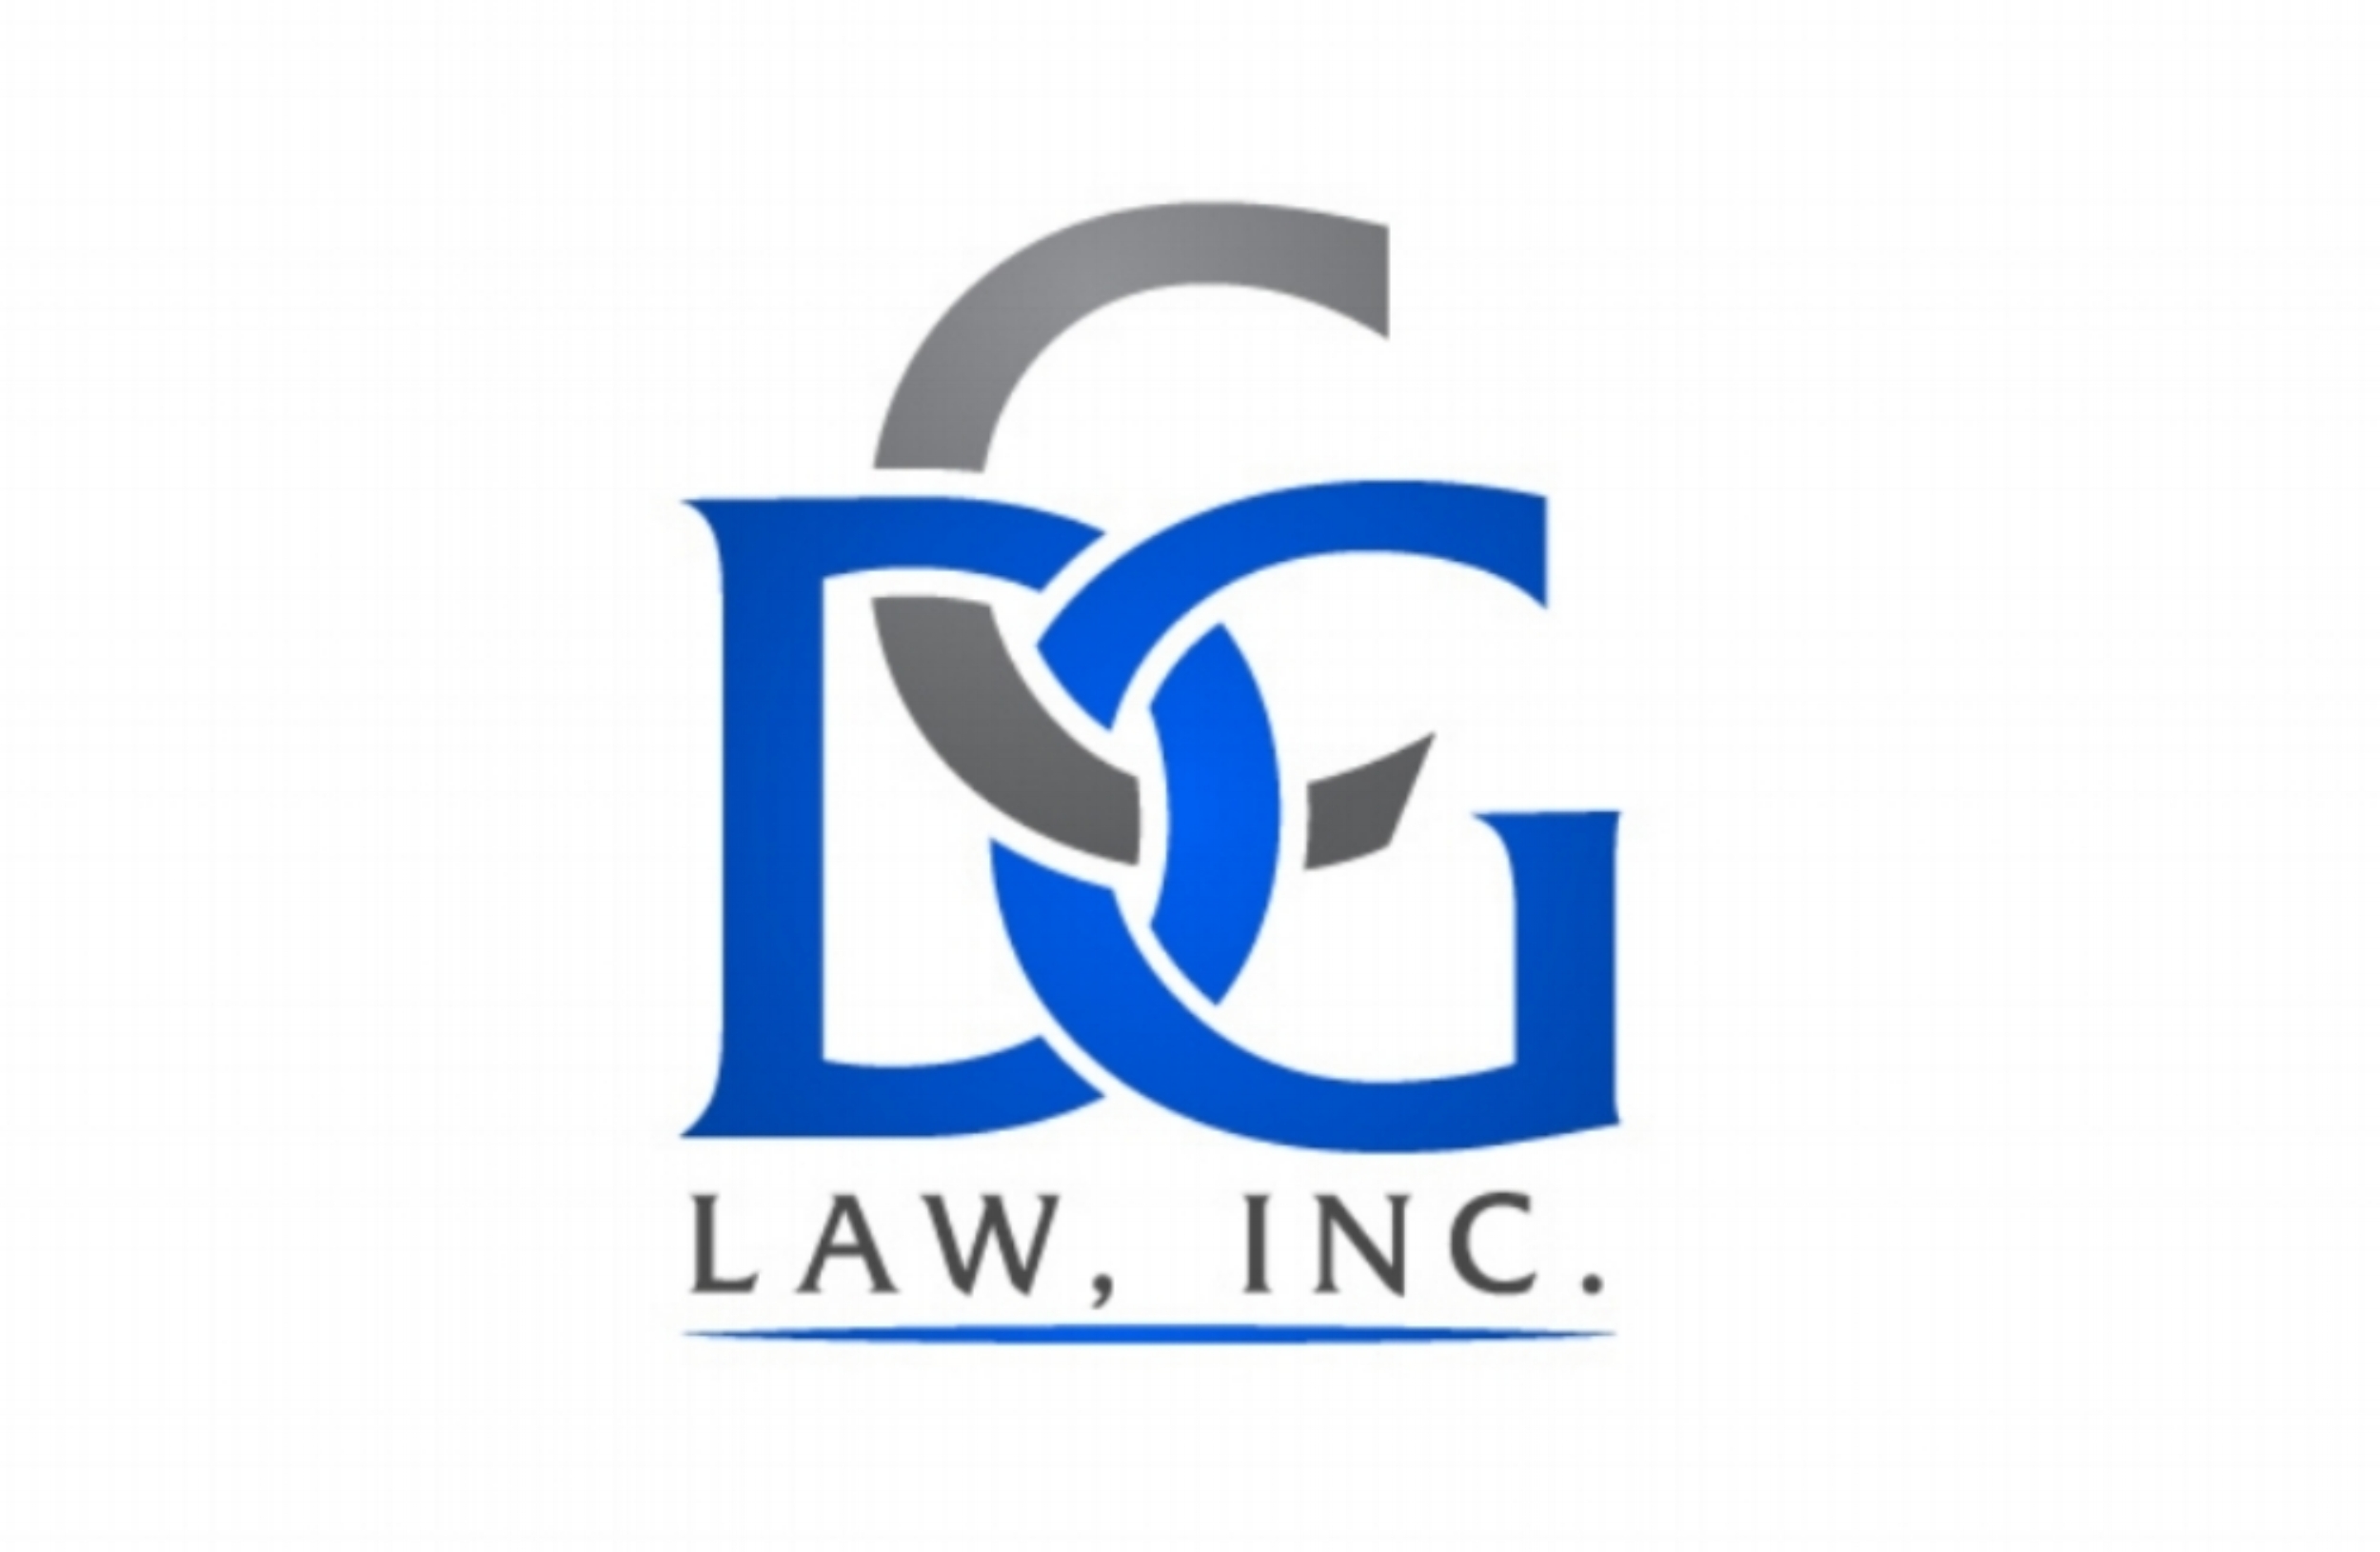 CDG Law, Inc.